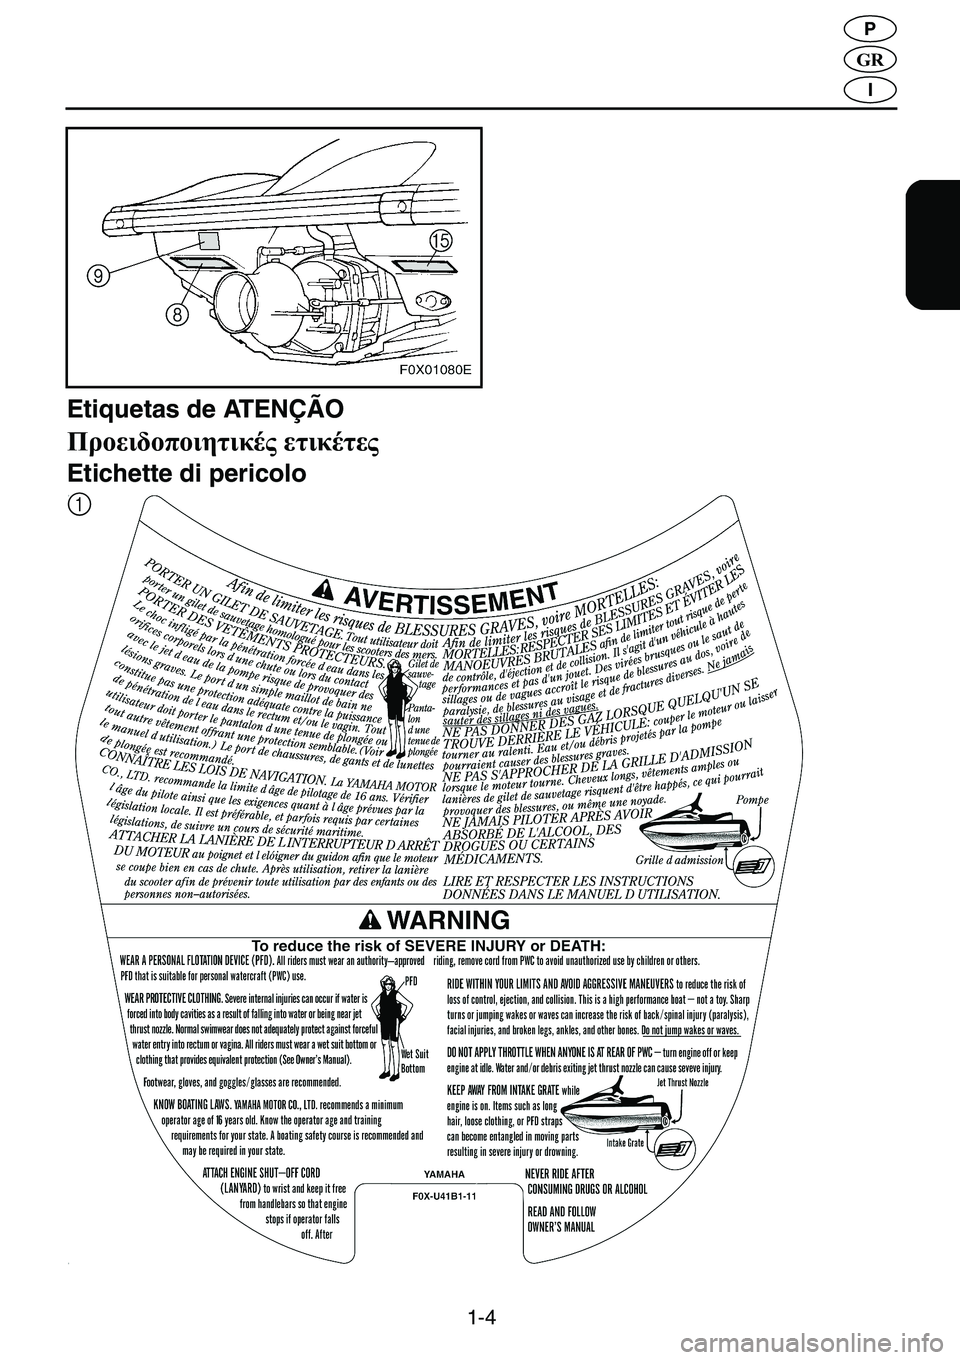 YAMAHA GP1200 2001  Manuale duso (in Italian) 1-4
�*�5
P
I
Etiquetas de ATENÇÃO 
! 0/ Œ 2"�0220"�
Etichette di pericolo 
1 